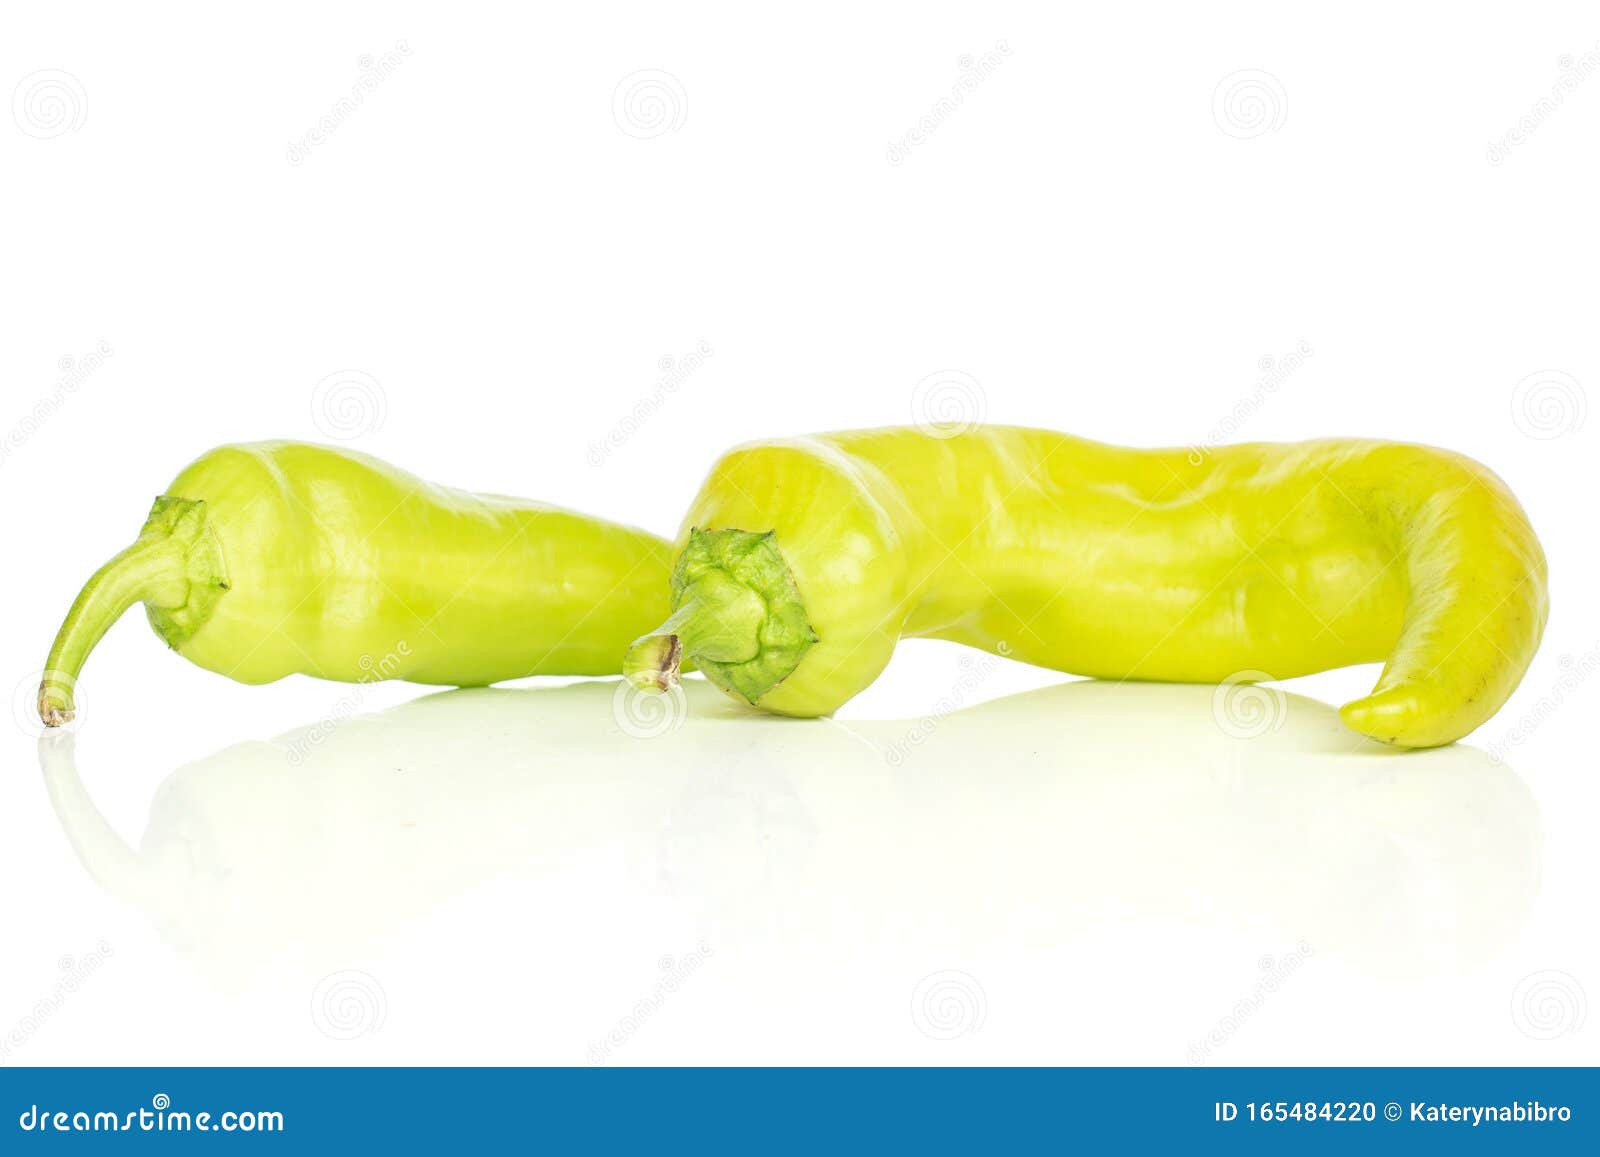 7,716 Fotos de Stock de Grupo Da Banana Verde E Amarela No Fundo Branco